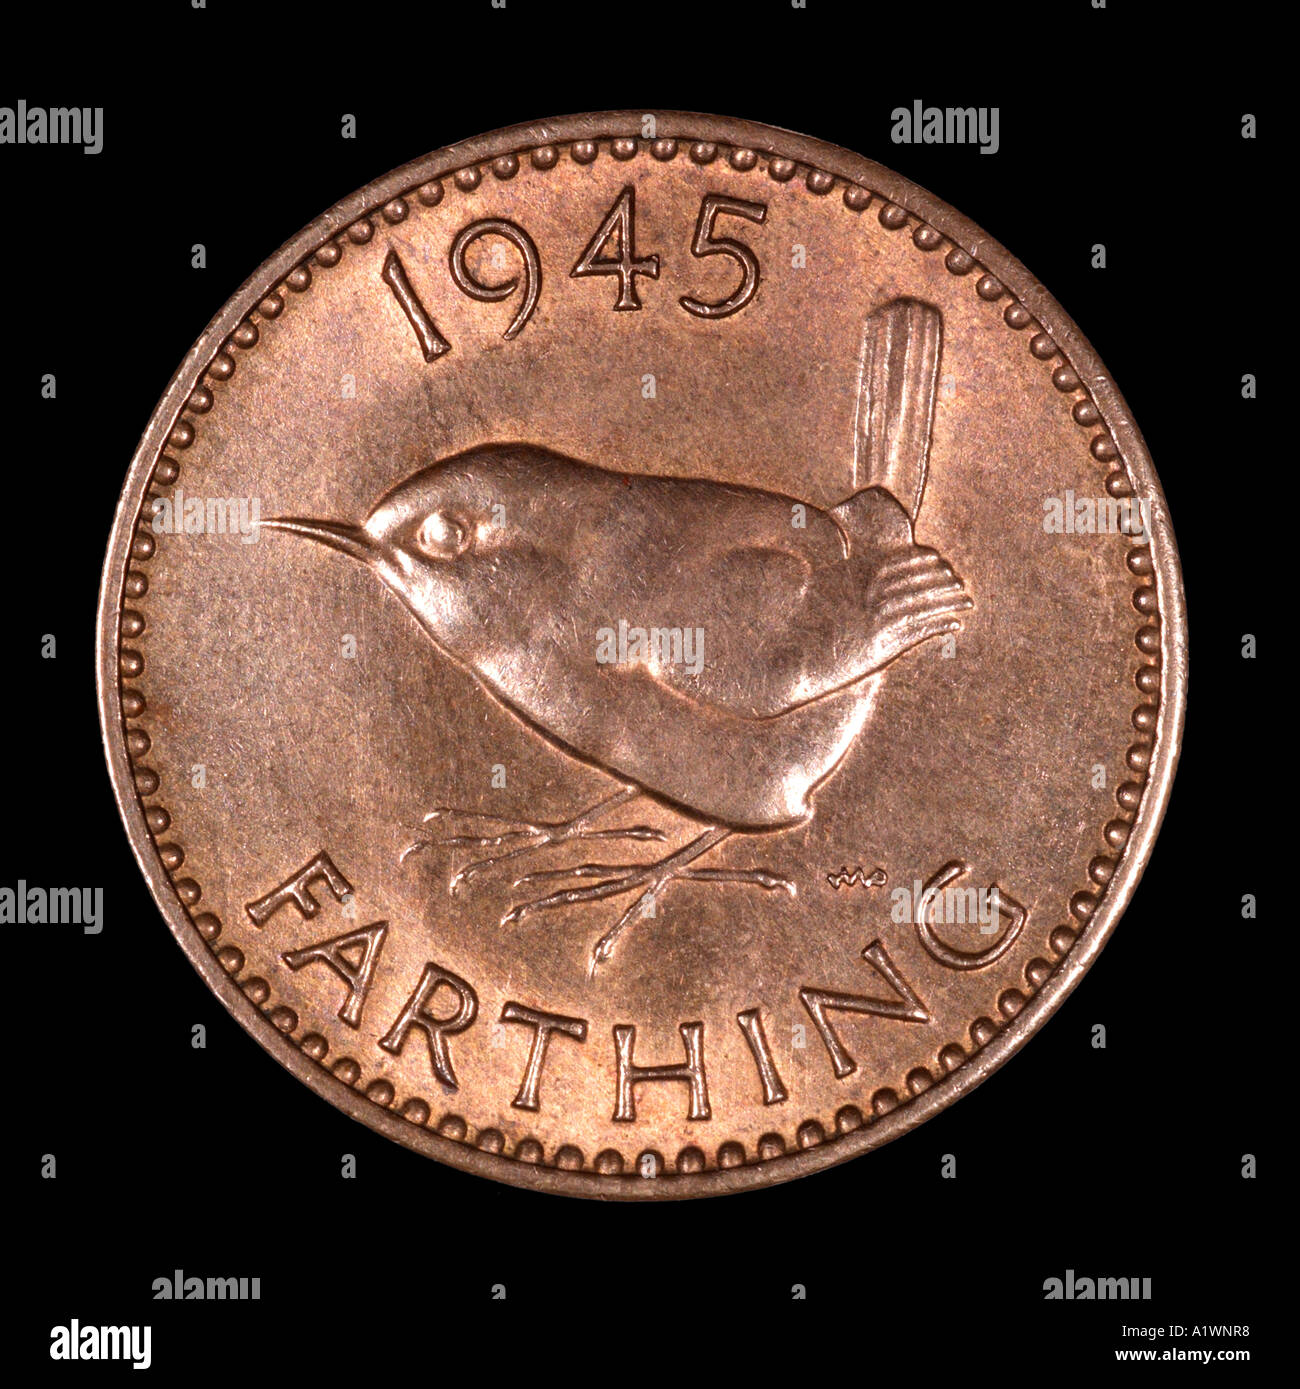 King George VI Reg fid def pre decimal quarter farthing penny old pence P 1949 copper bright robin bird left omn rex dei Stock Photo